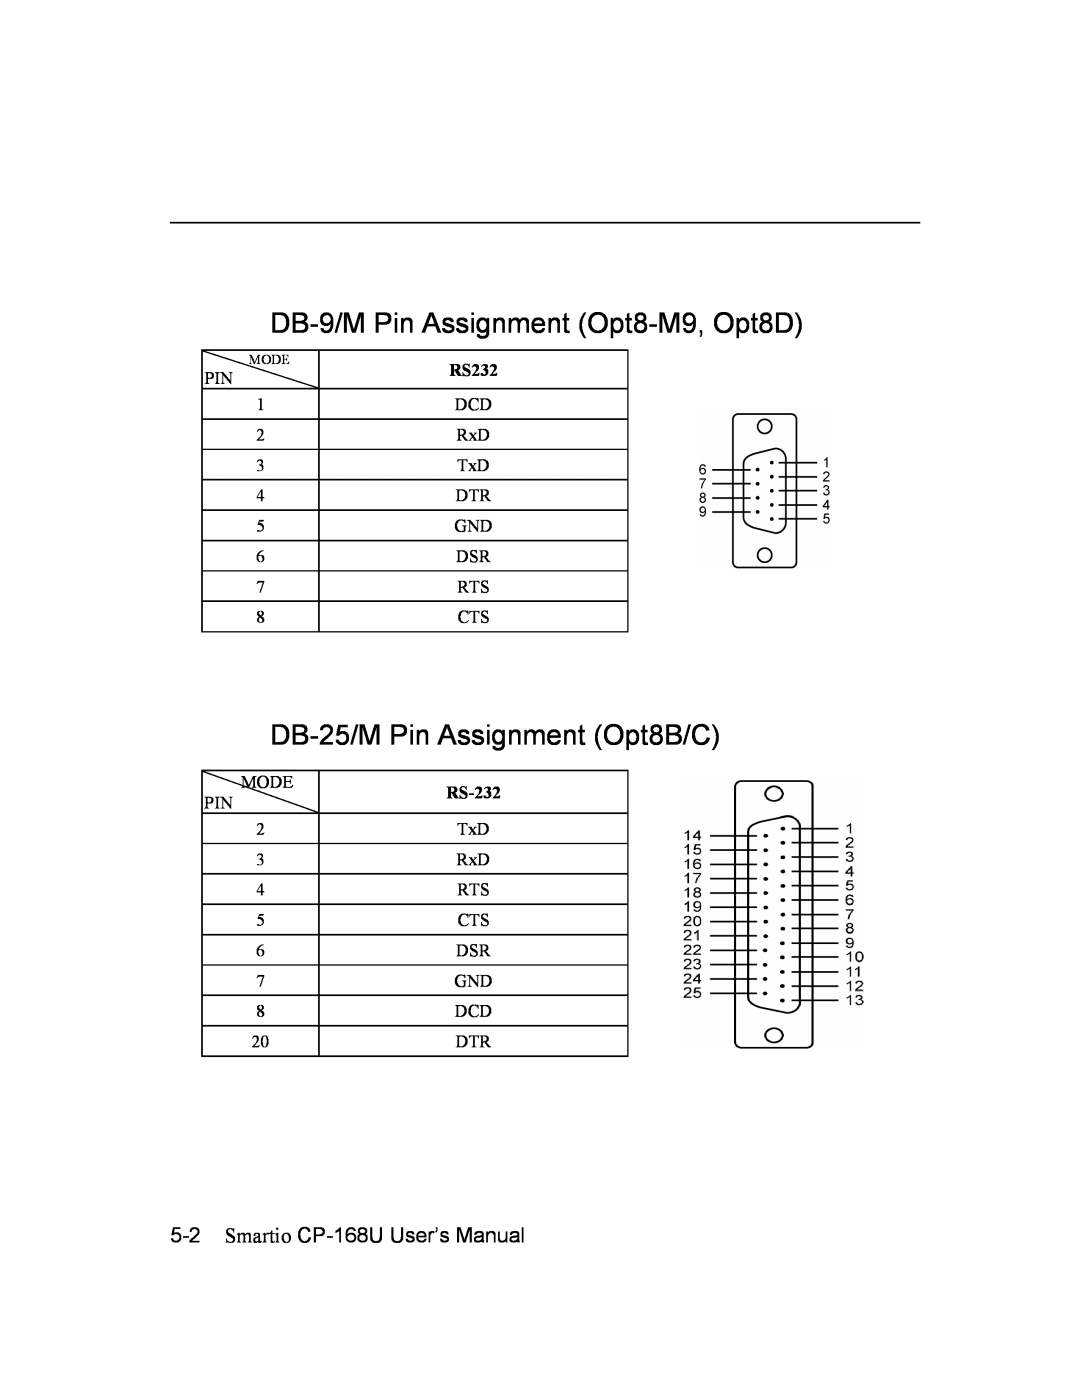 Moxa Technologies CP-168U user manual DB-9/M Pin Assignment Opt8-M9, Opt8D, DB-25/M Pin Assignment Opt8B/C 